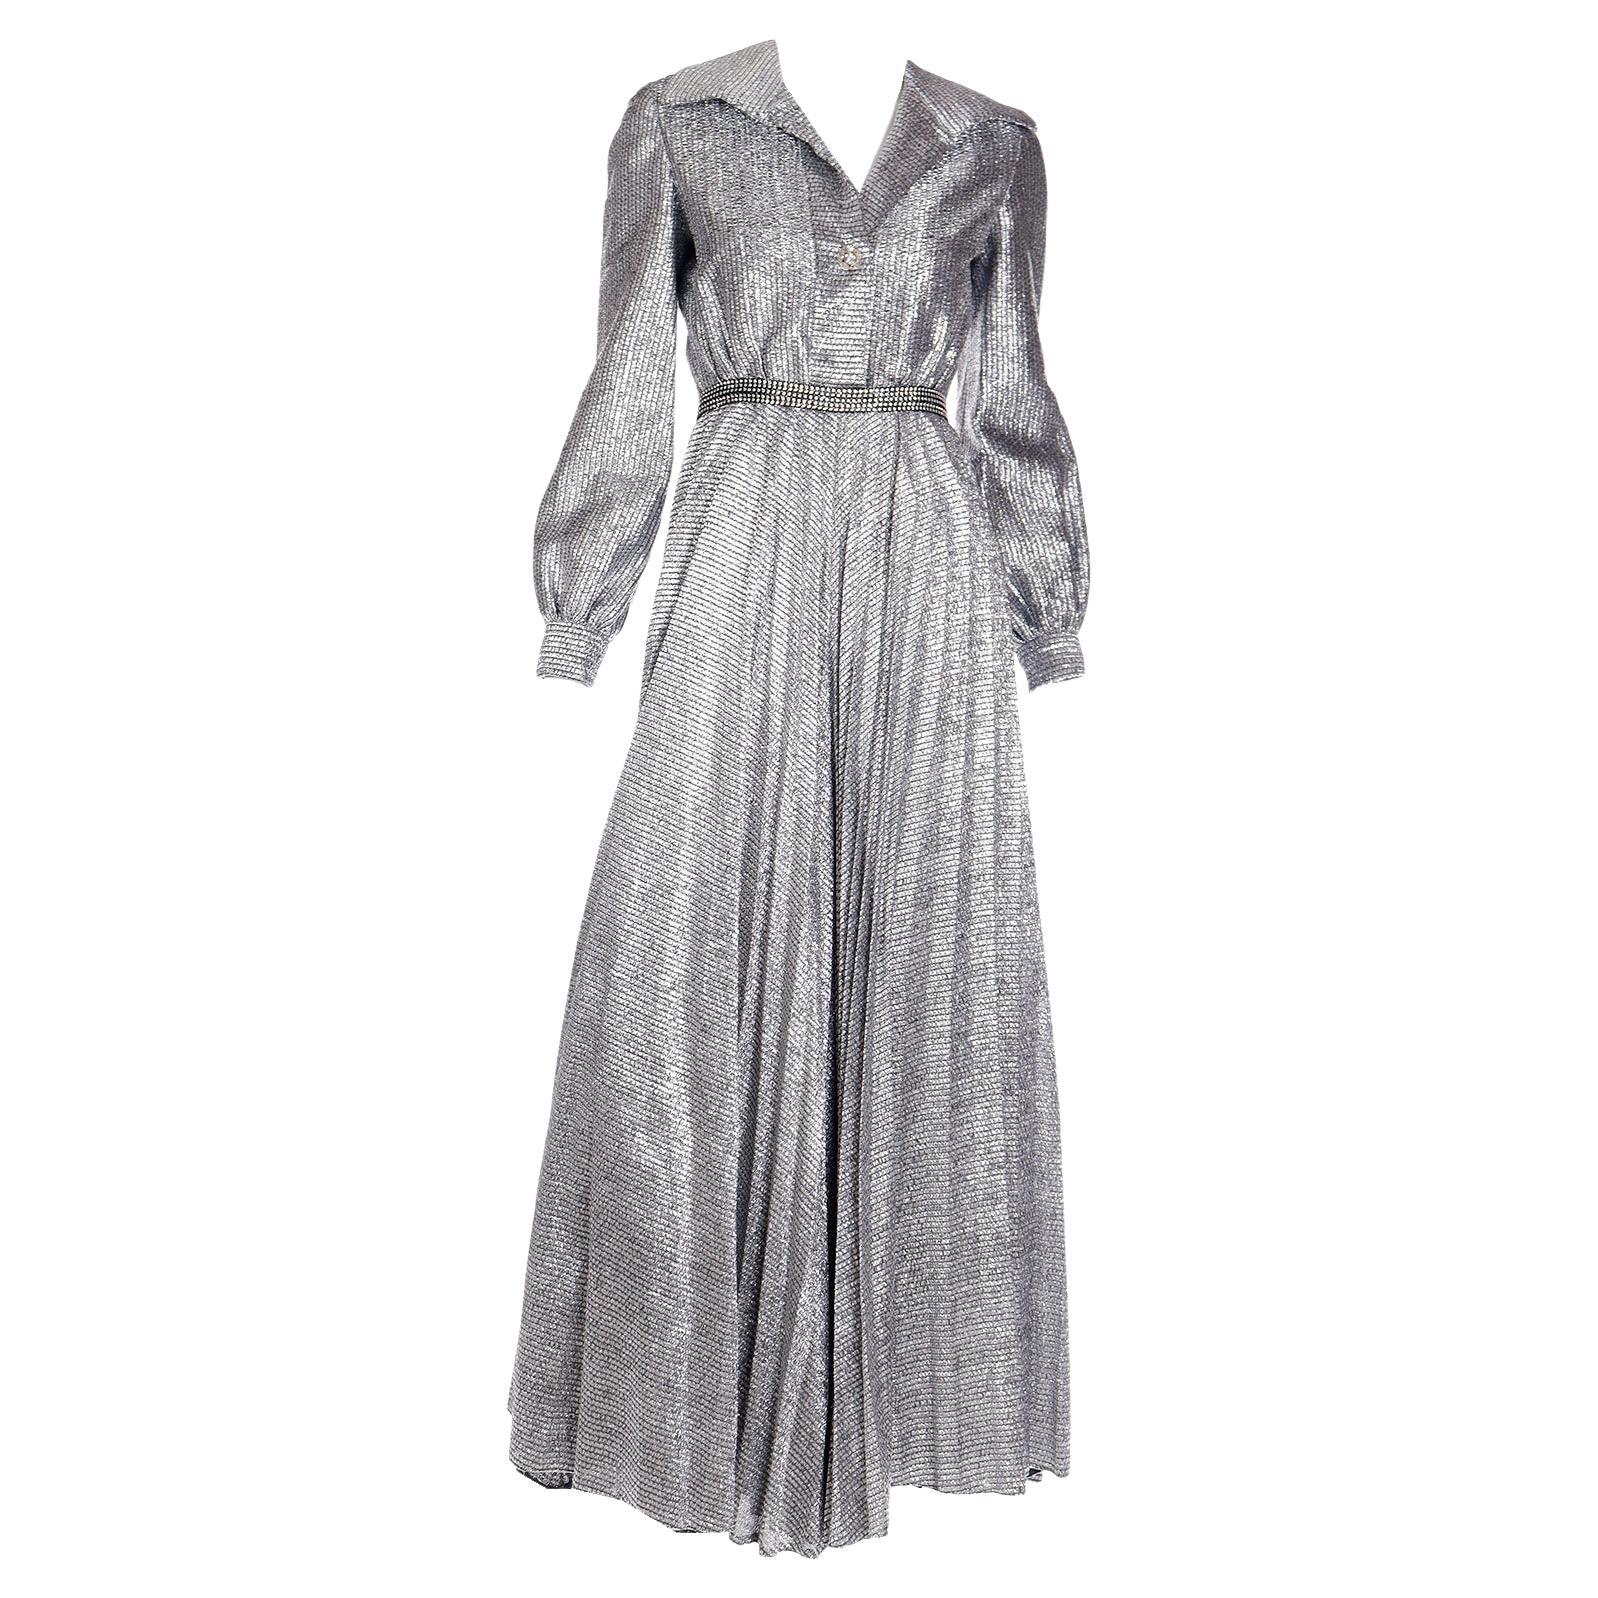 Vintage 1960s 1970s Silver Sparkle Palazzo Jumpsuit Evening Dress Alternative For Sale